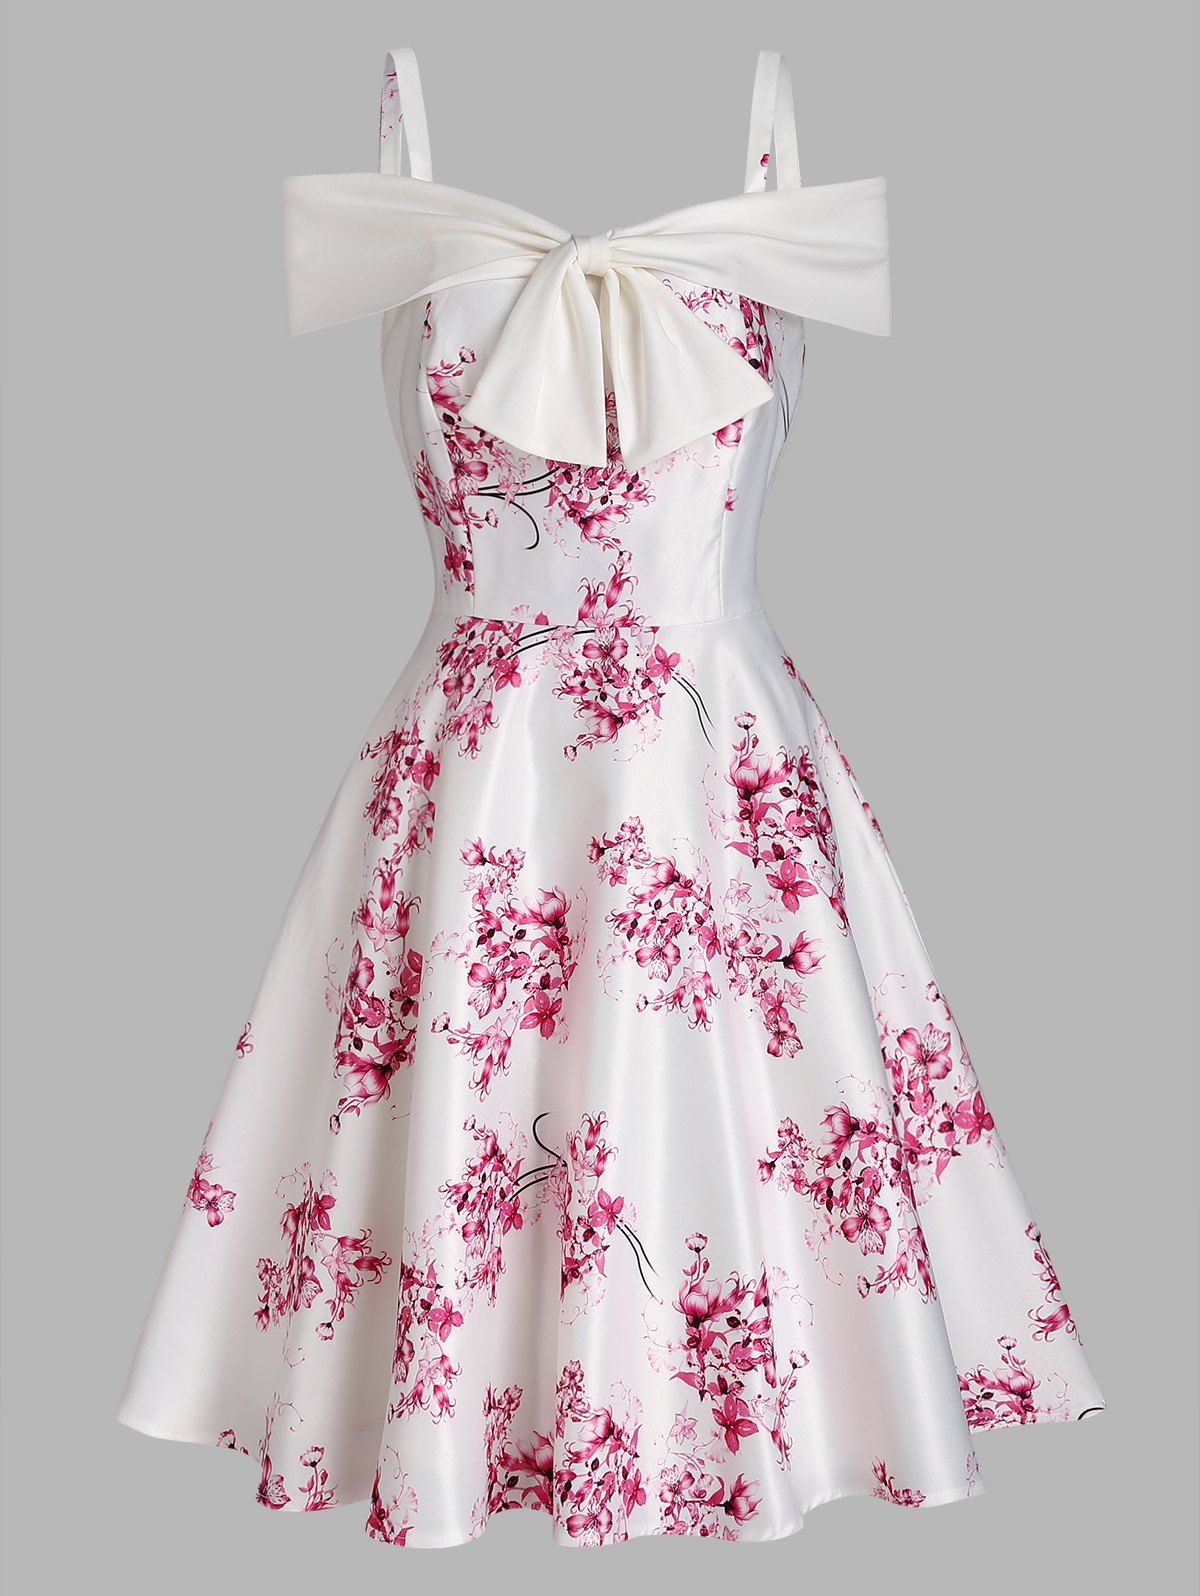 Flower Print Party Dress Cold Shoulder Mini Dress Bowknot Front A Line Dress - LIGHT PINK M